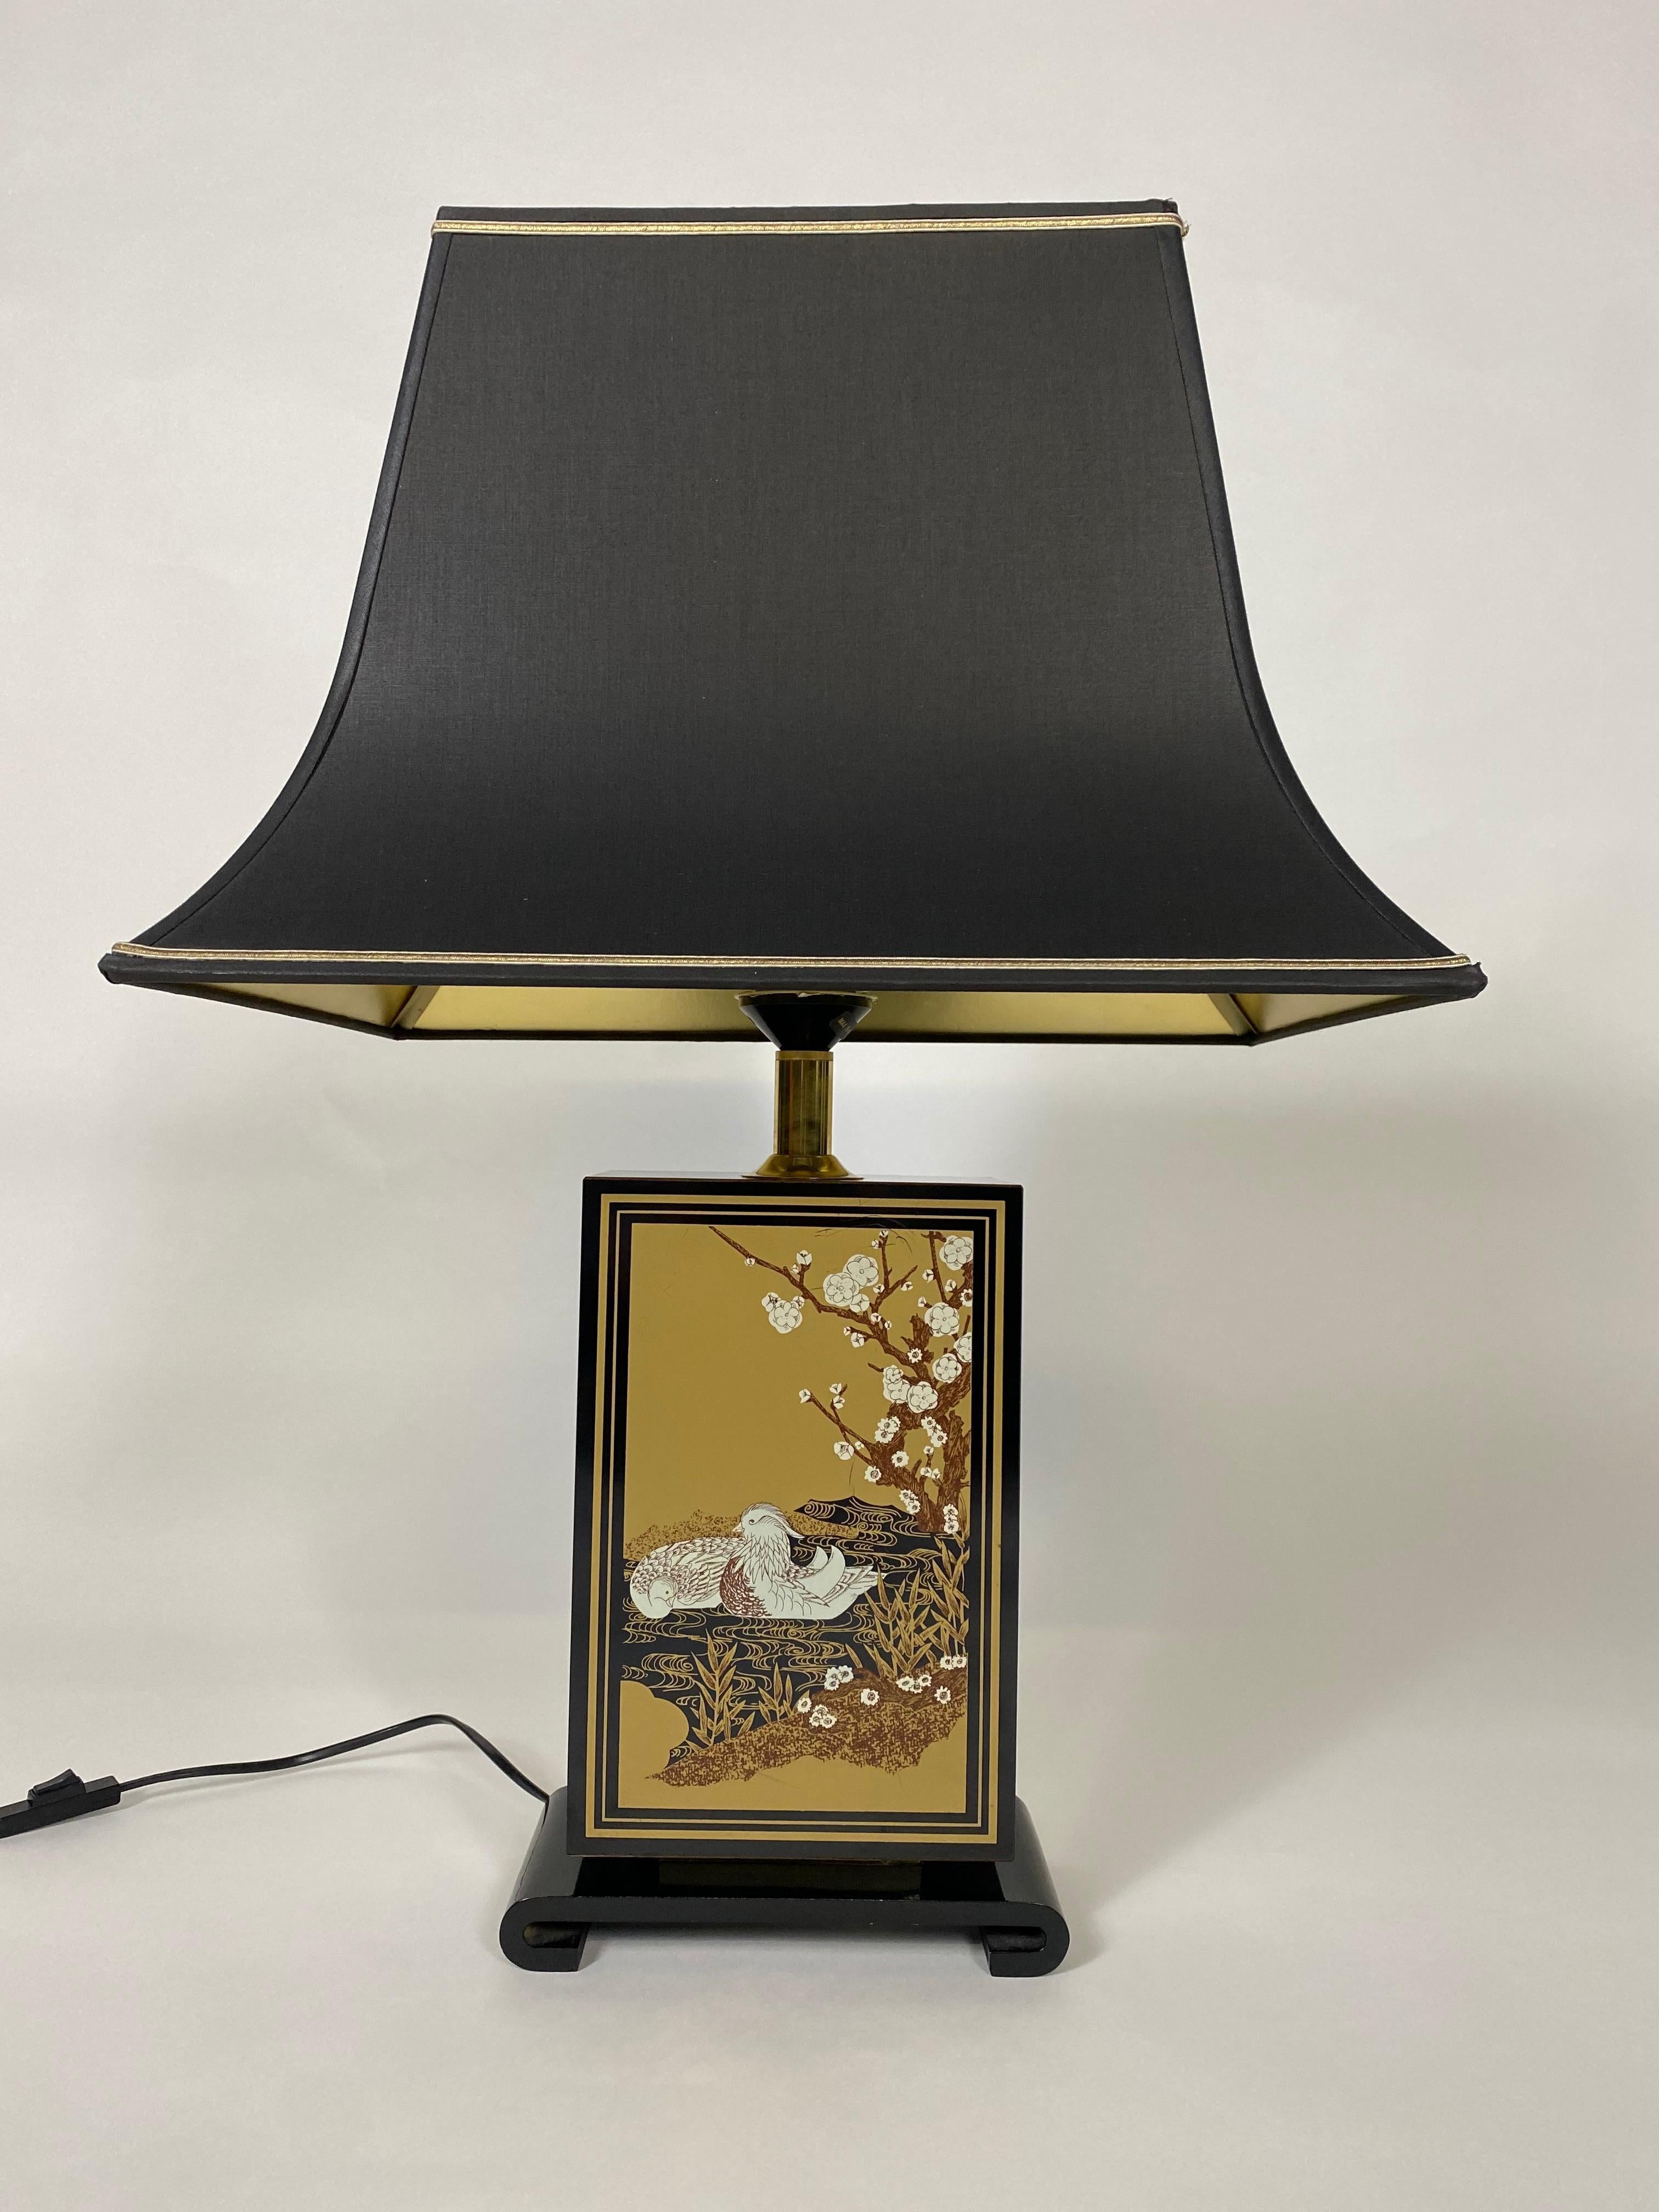 Maison Le Dauphin Pagode Design Table Lamp France 1970's Hokkaido Table lamp For Sale 5